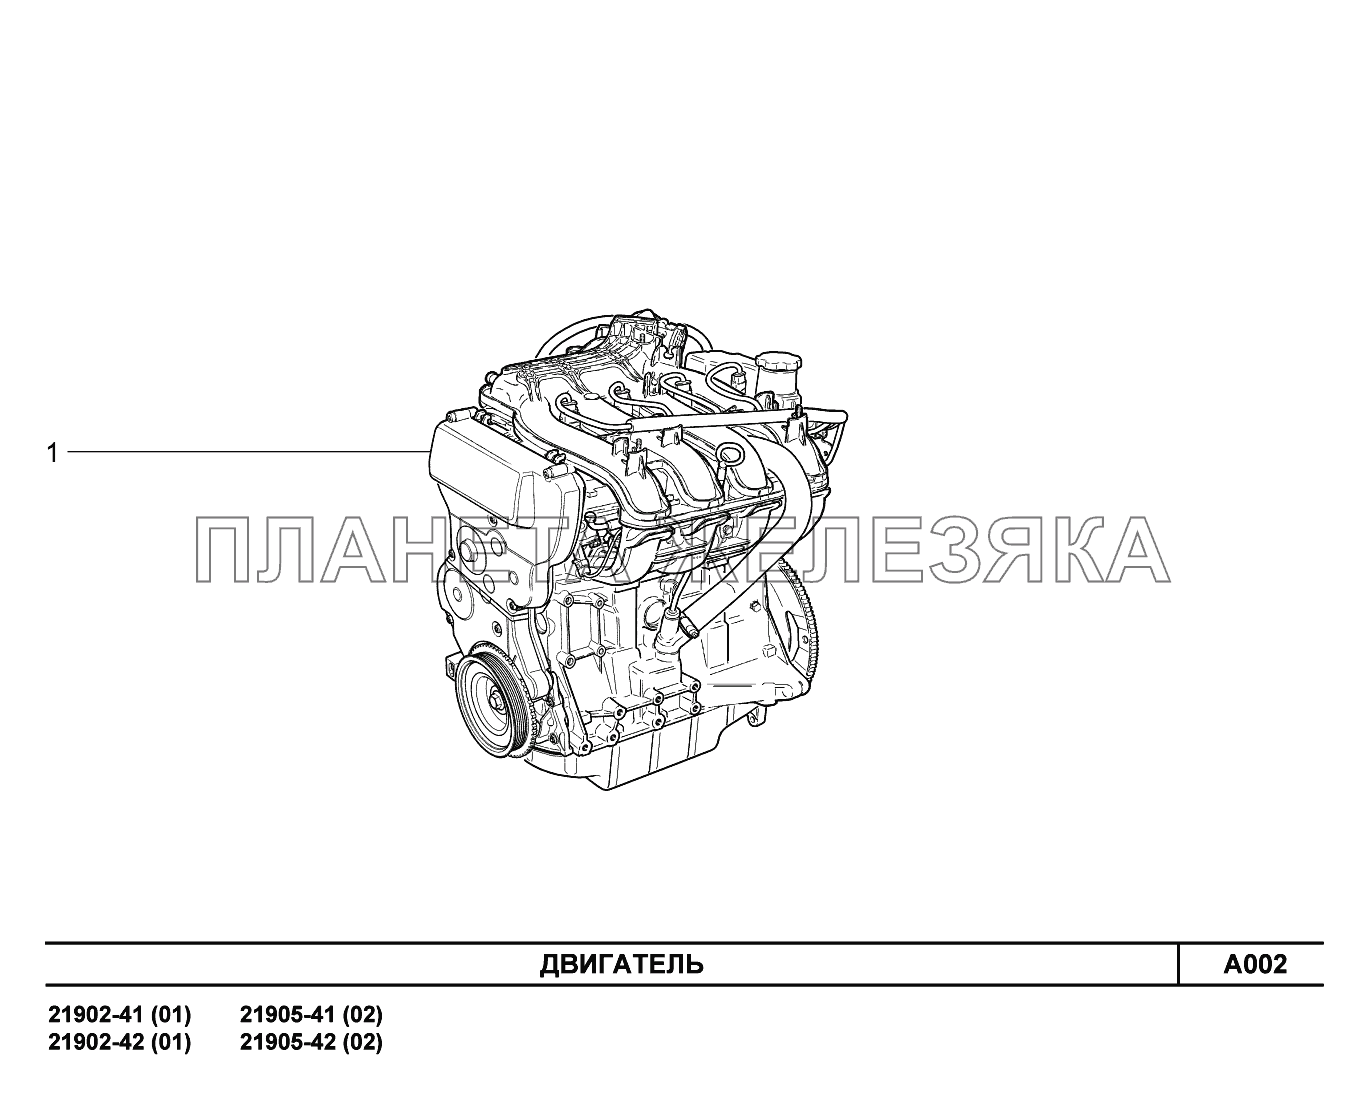 A002. Двигатель Lada Granta-2190